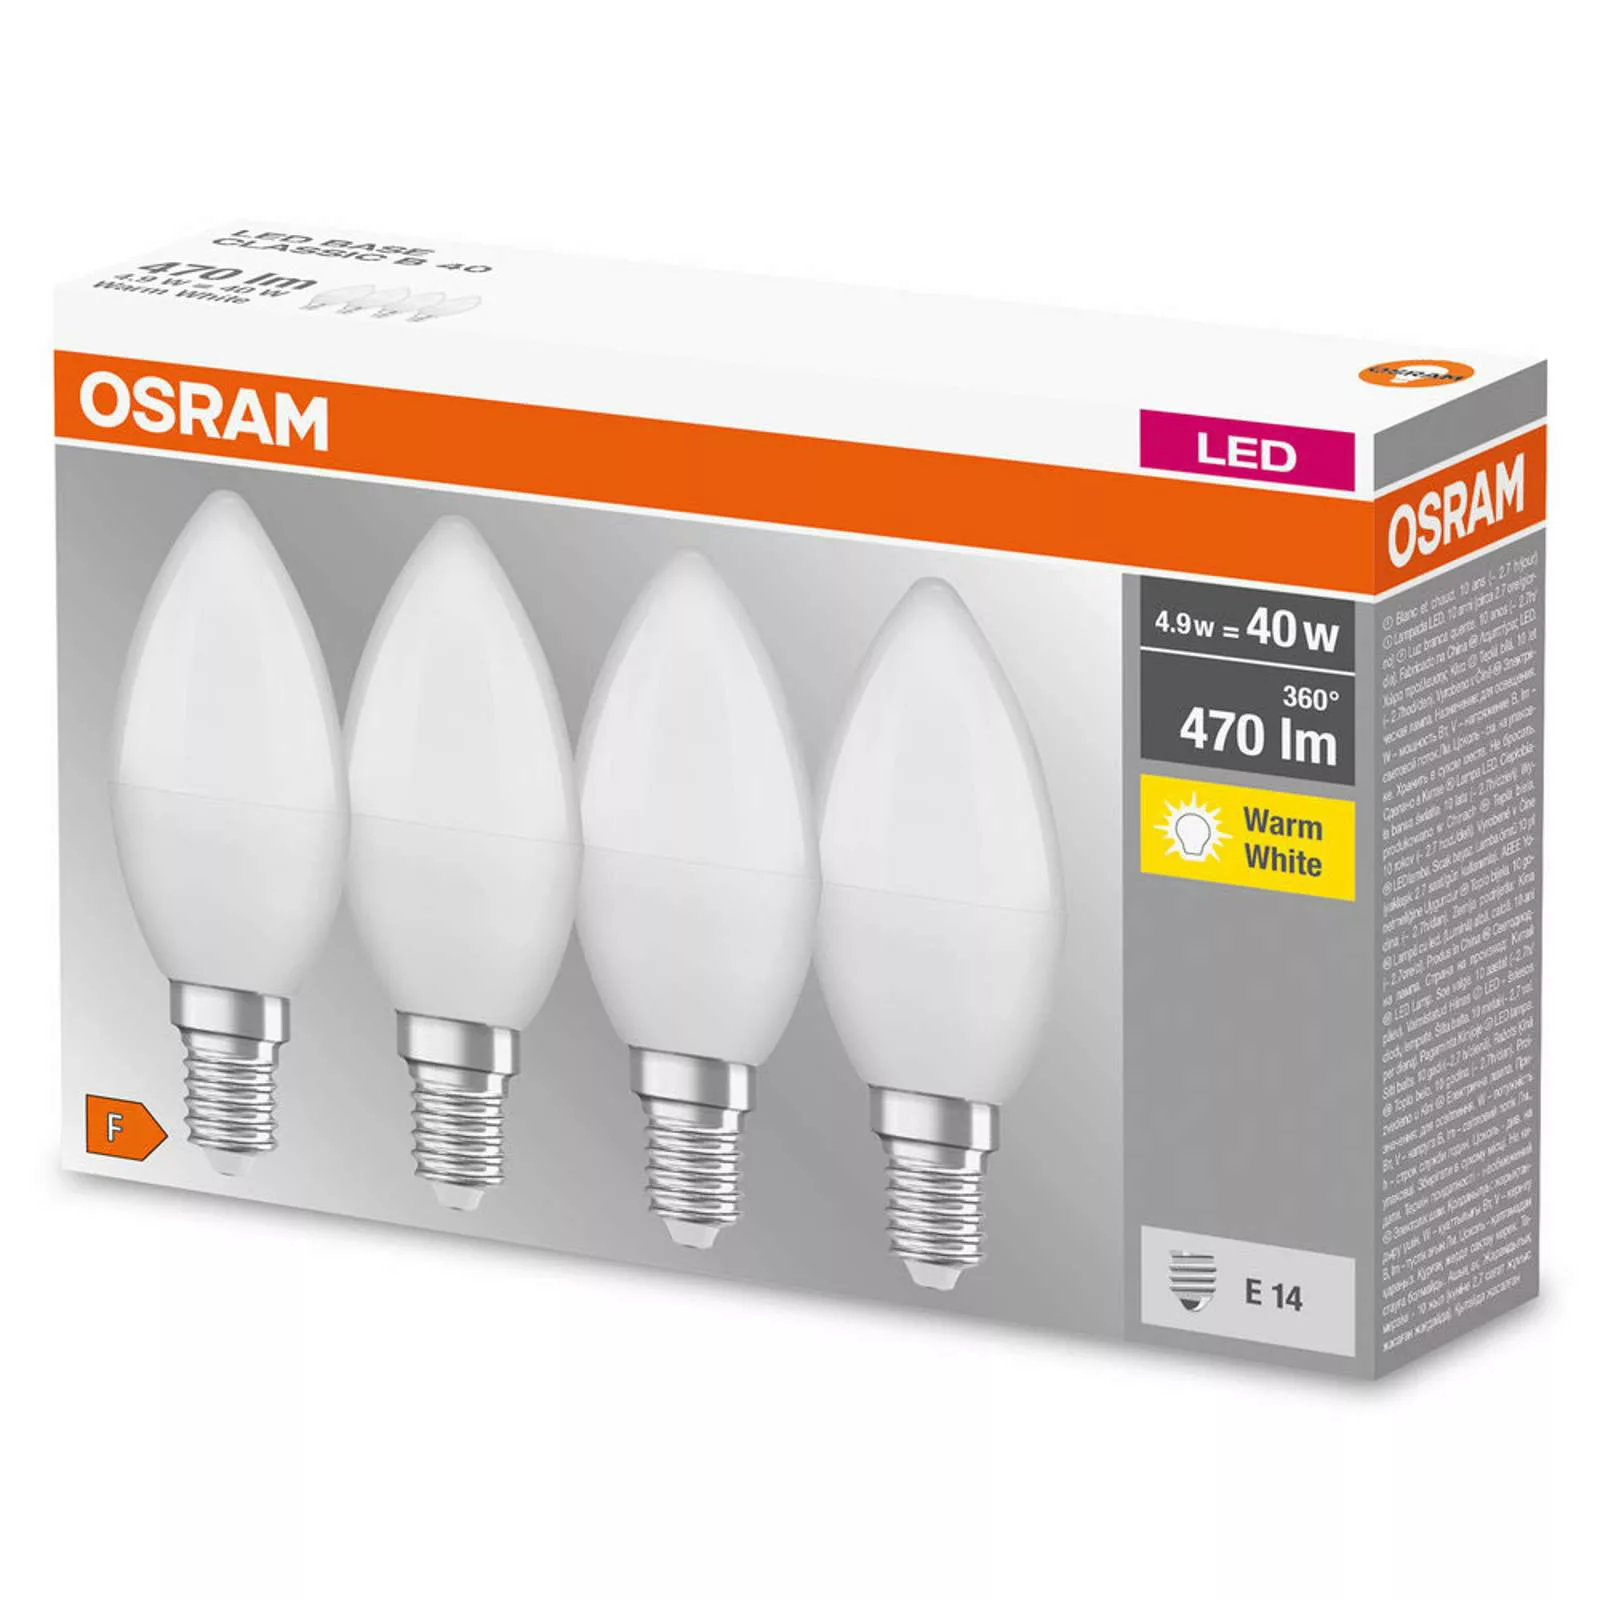 Osram LED Lampe ersetzt 40W E14 Kerze - B35 in Weiß 4,9W 470lm 2700K 4er Pa günstig online kaufen